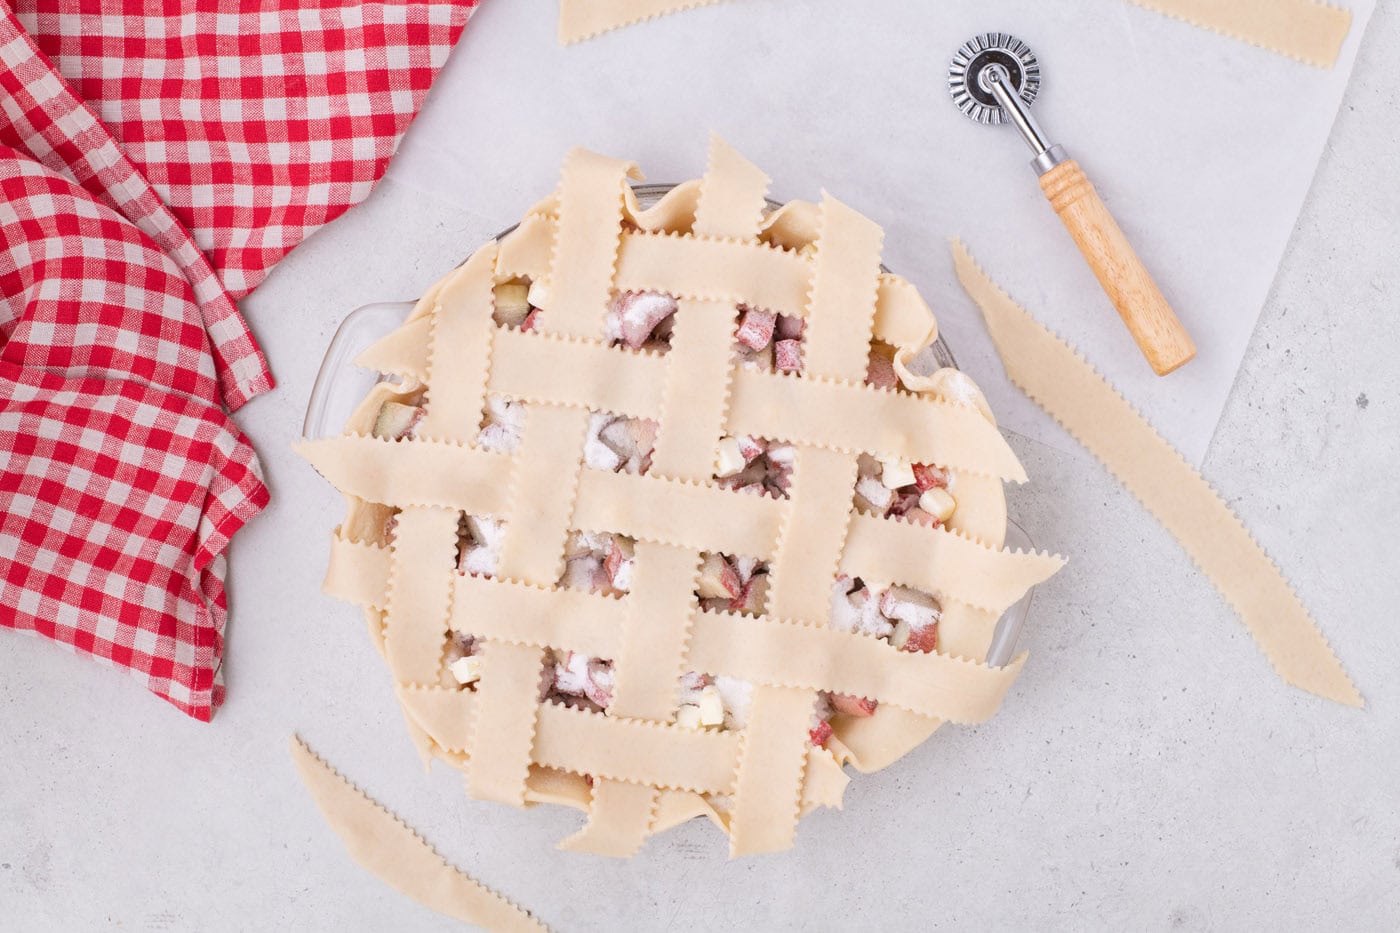 weaving pie crust strips into a lattice top over rhubarb pie